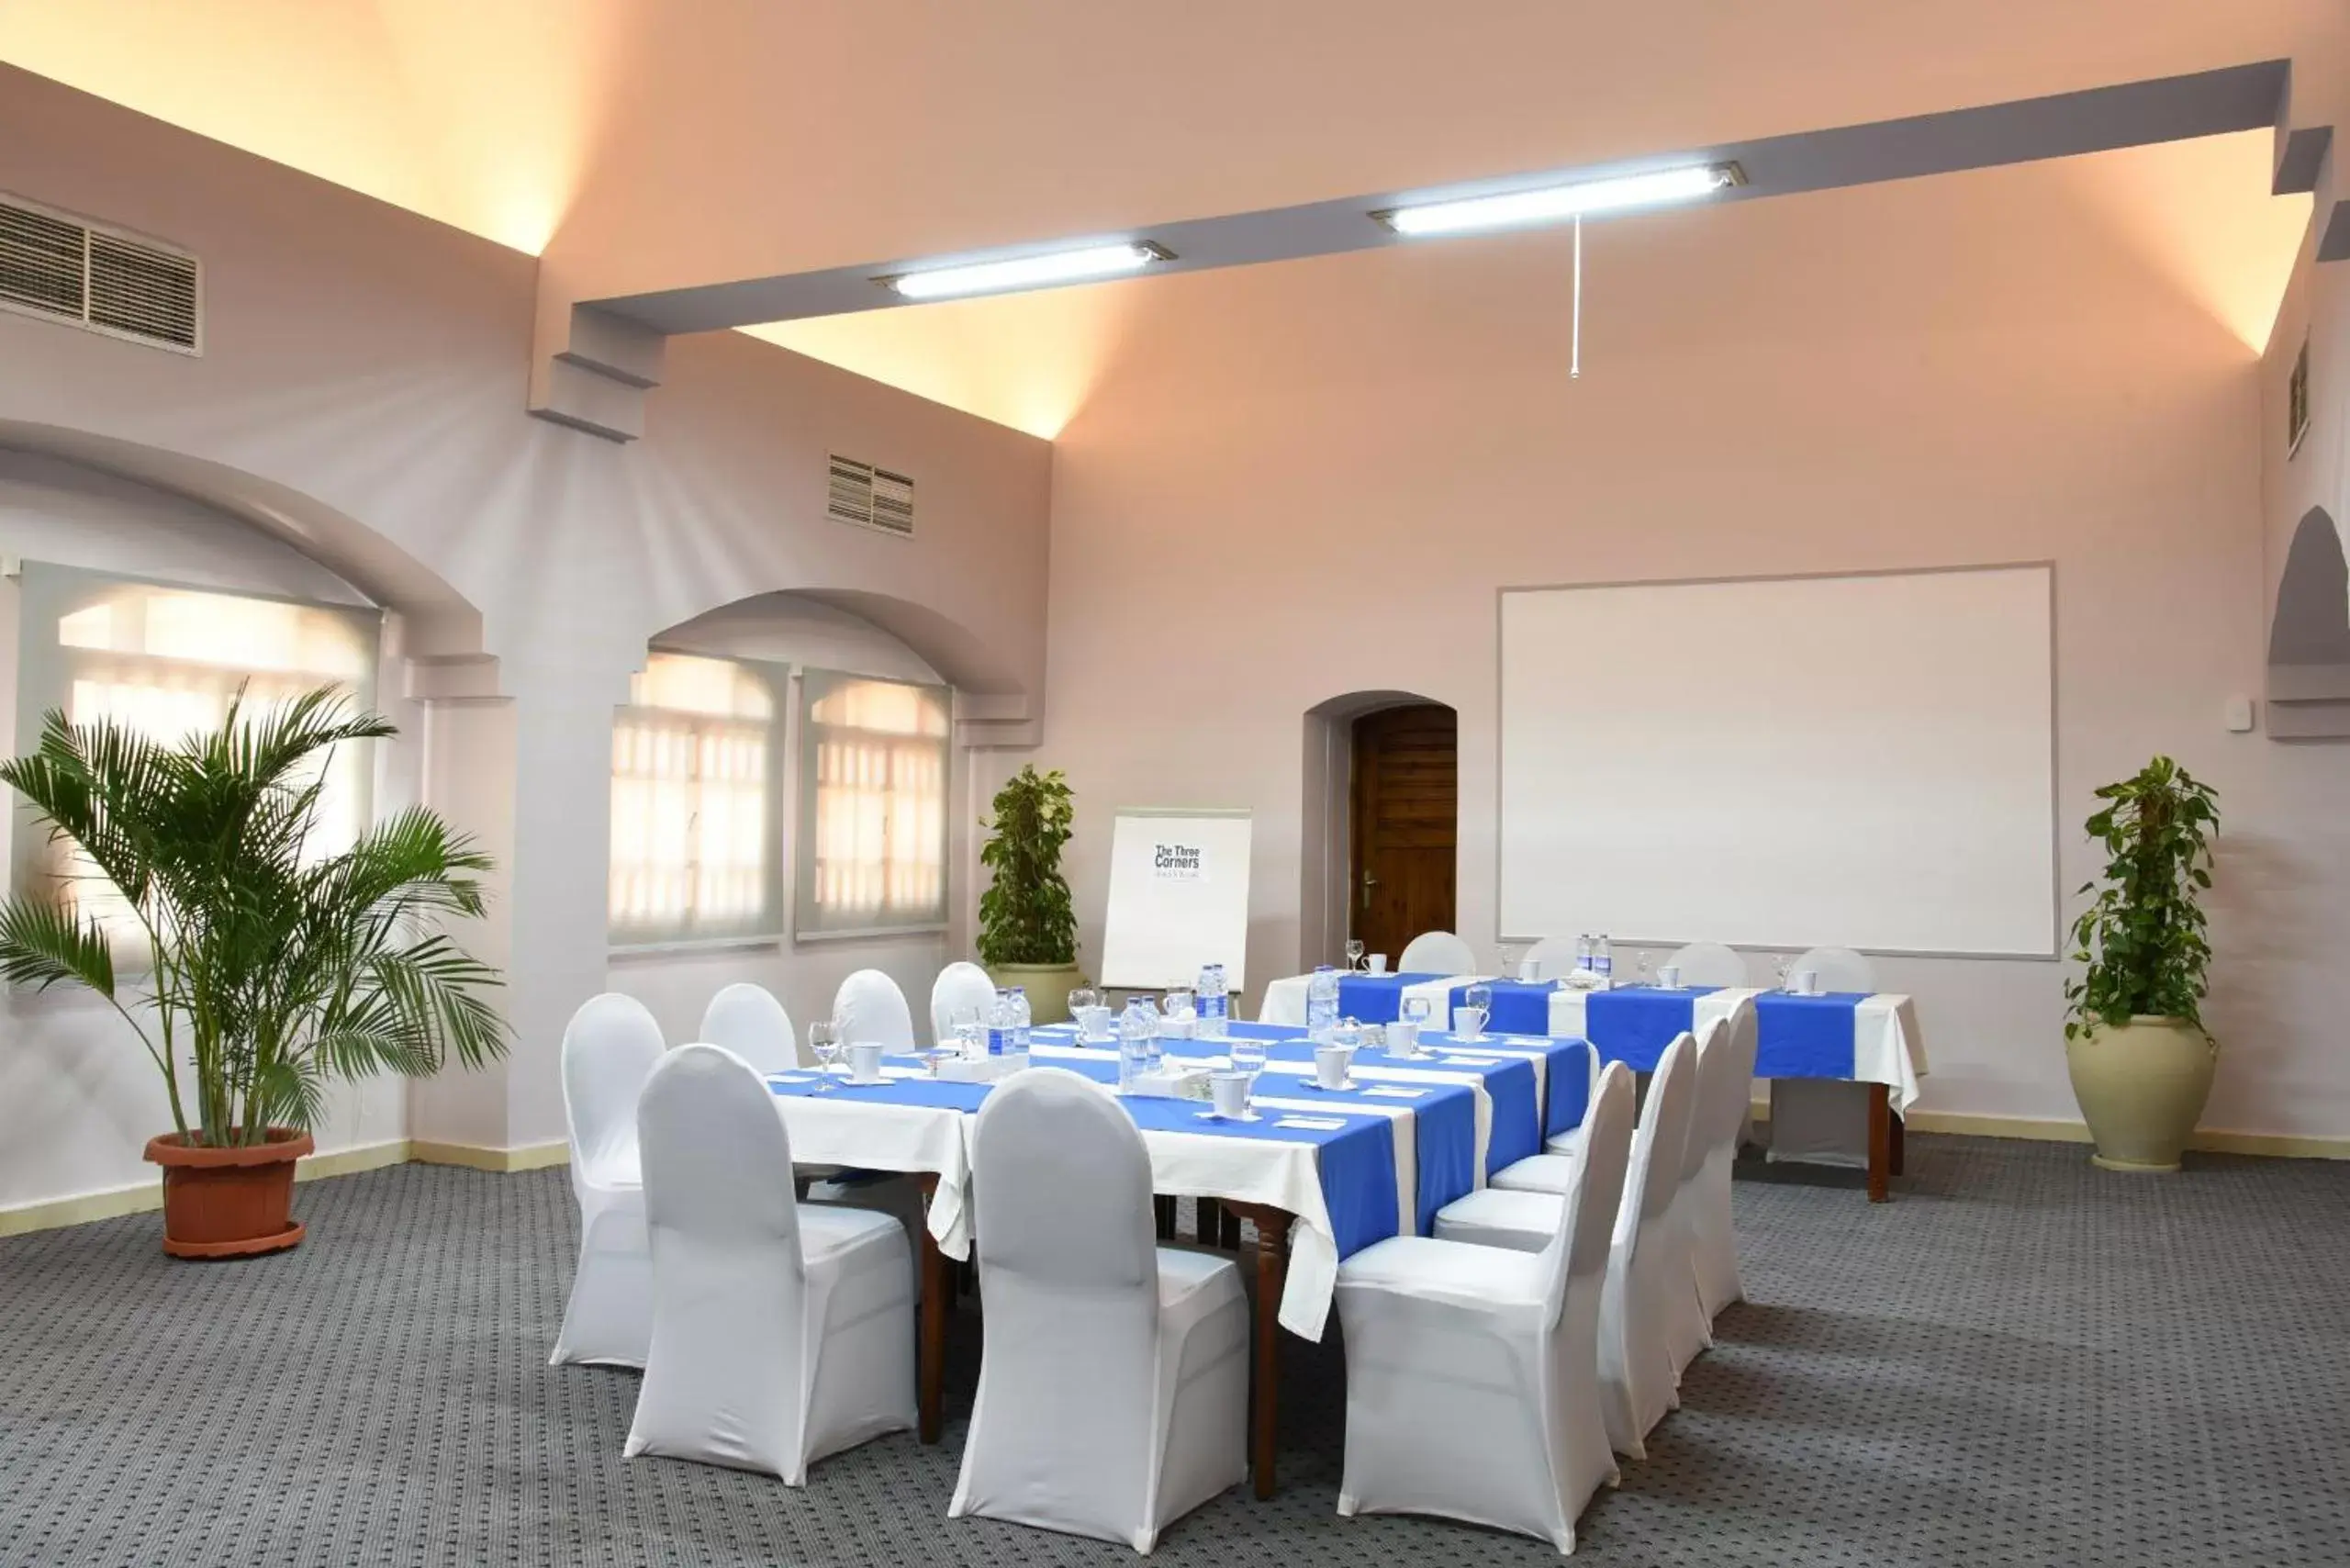 Meeting/conference room, Banquet Facilities in The Three Corners Rihana Resort El Gouna